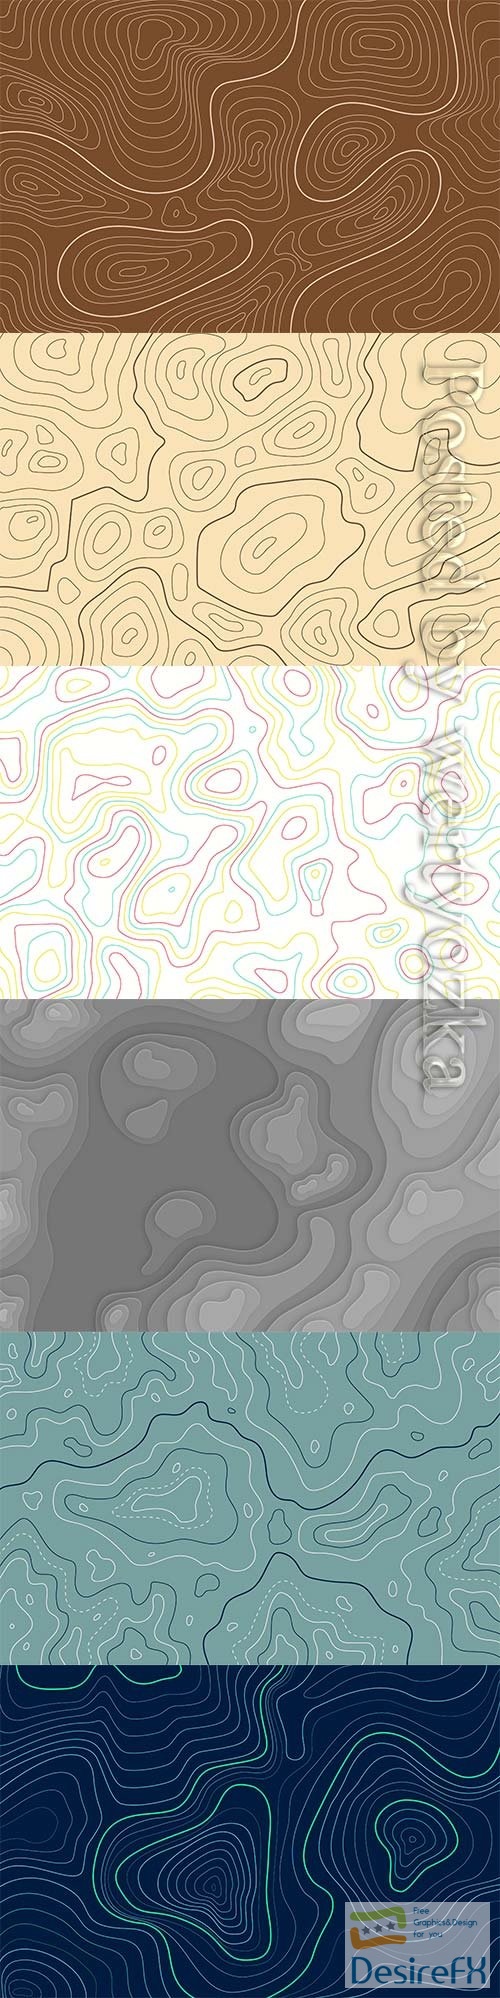 Topographic map wallpaper vector background